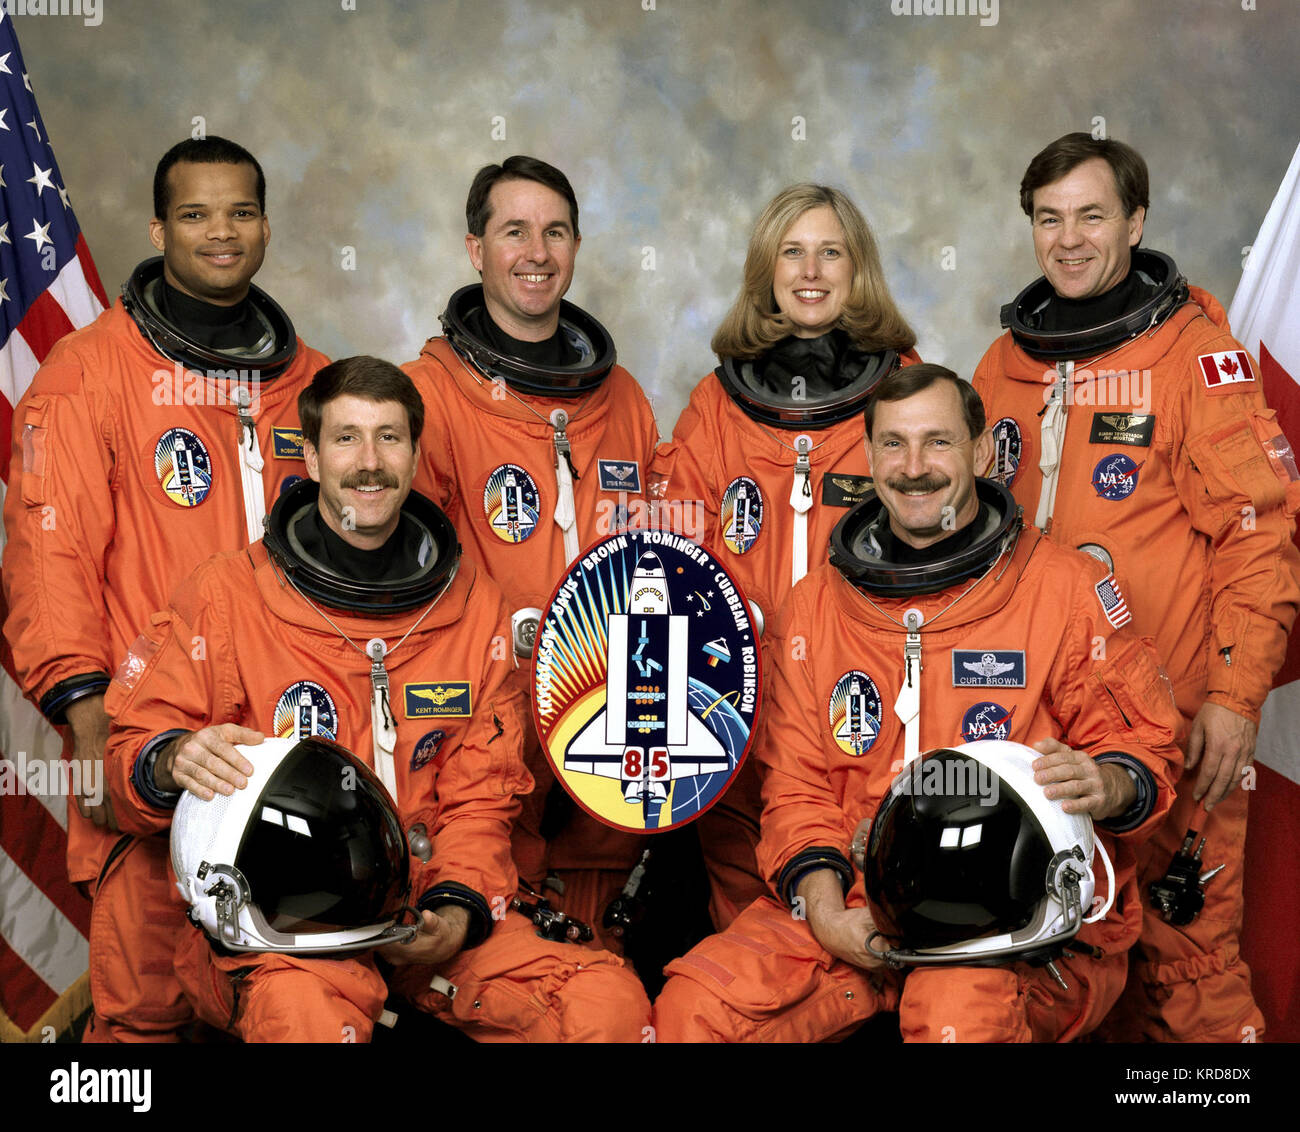 STS-85 CREW PORTRAIT: IN FRONT: CURTIS BROWN (RIGHT) PILOT KENT V. ROMINGER (LEFT). BACK ROW FROM LEFT: ROBERT CURBEAM; STEPHEN ROBINSON; JAN DAVIS; BJARNI TRYGGVASON. STS-85 crew Stock Photo